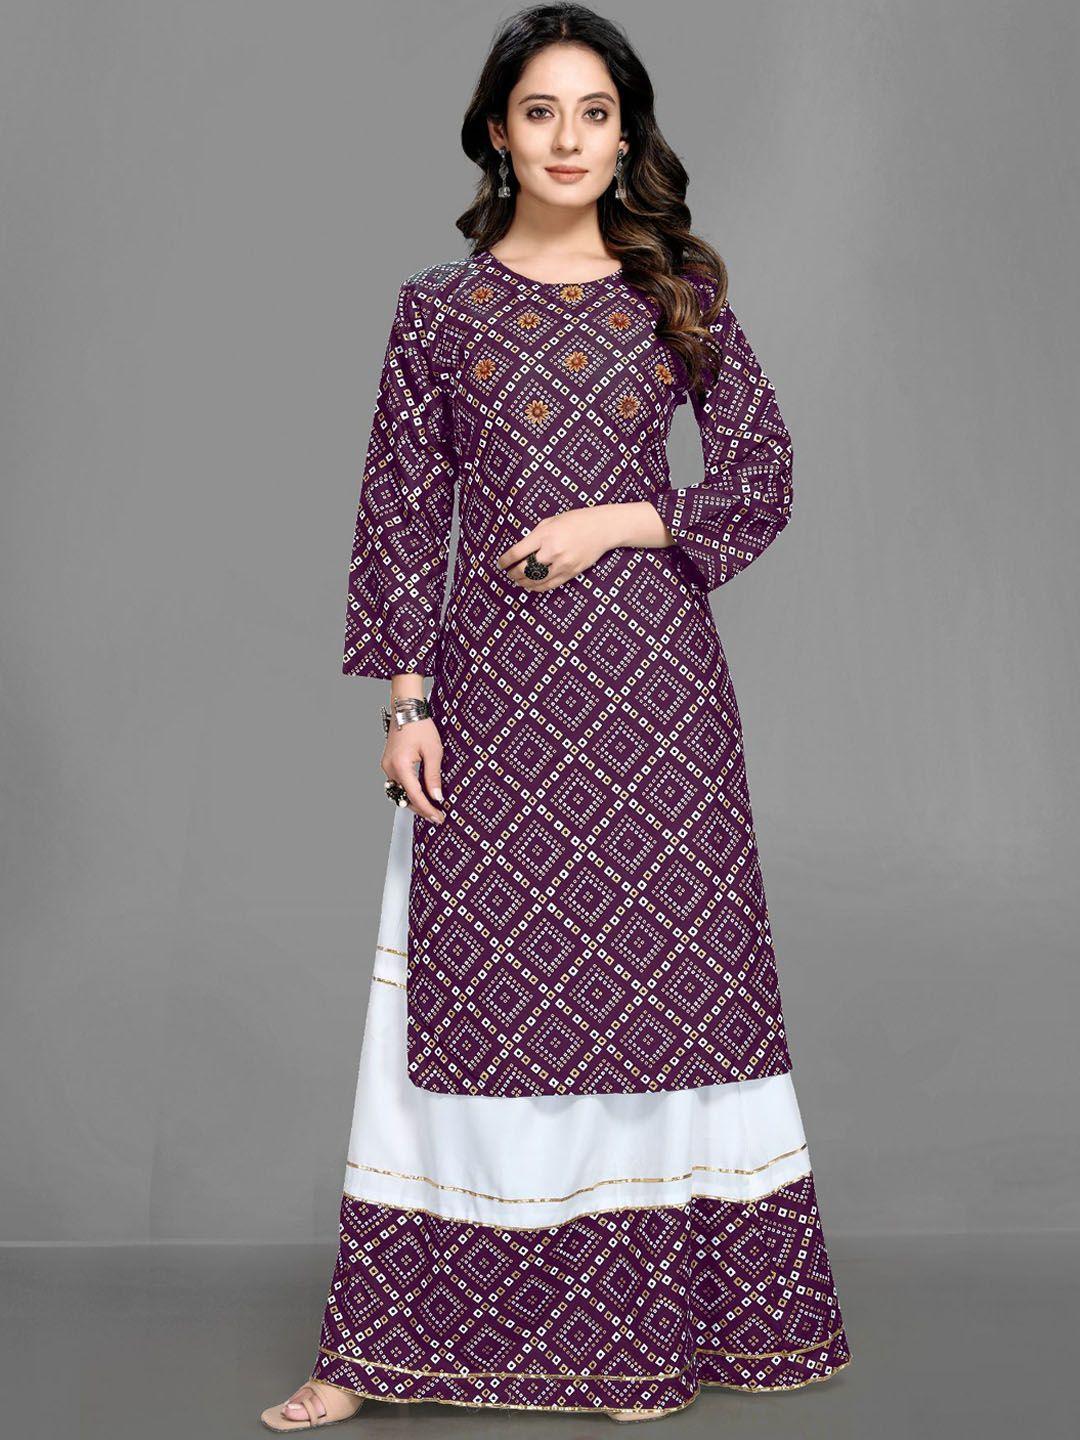 queenswear creation women purple ethnic motifs printed beads and stones kurta with skirt